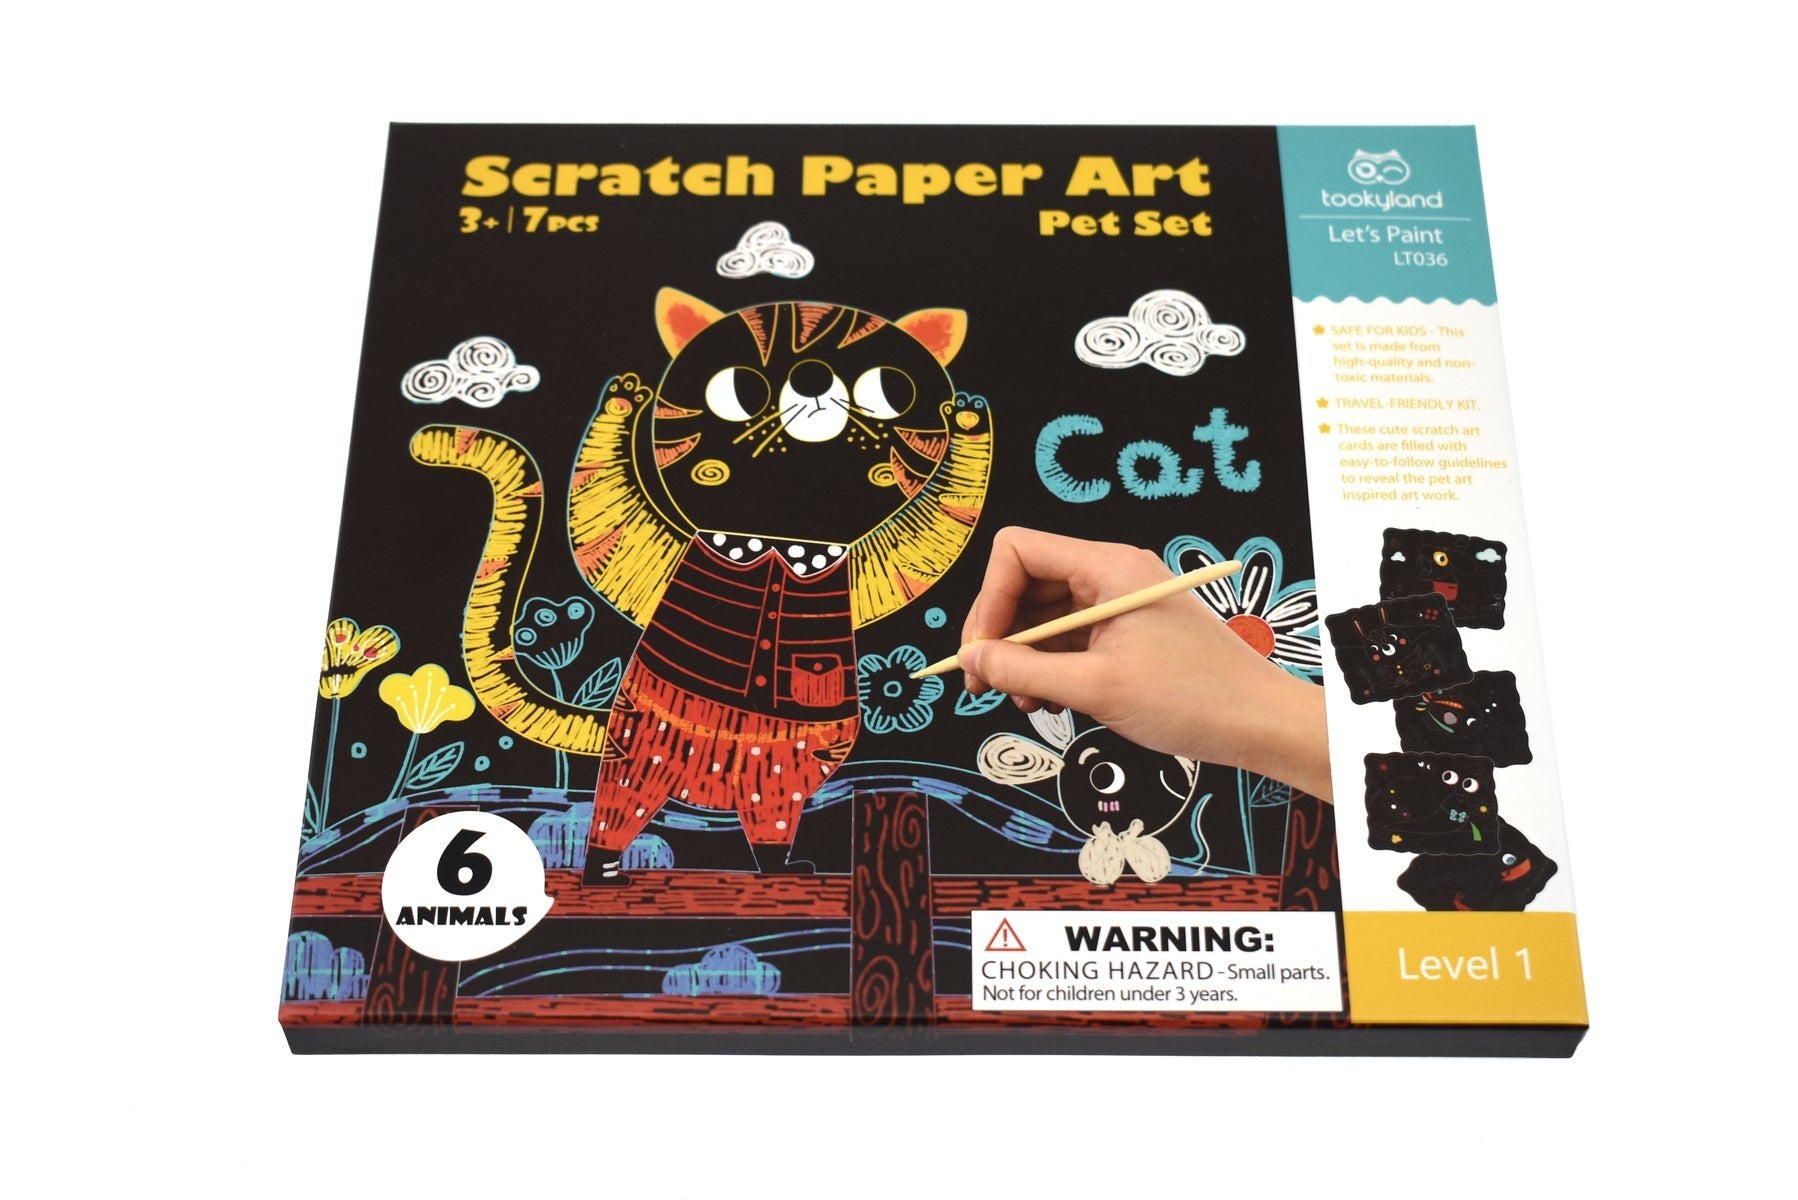 Scratch Paper Art - Pet Set